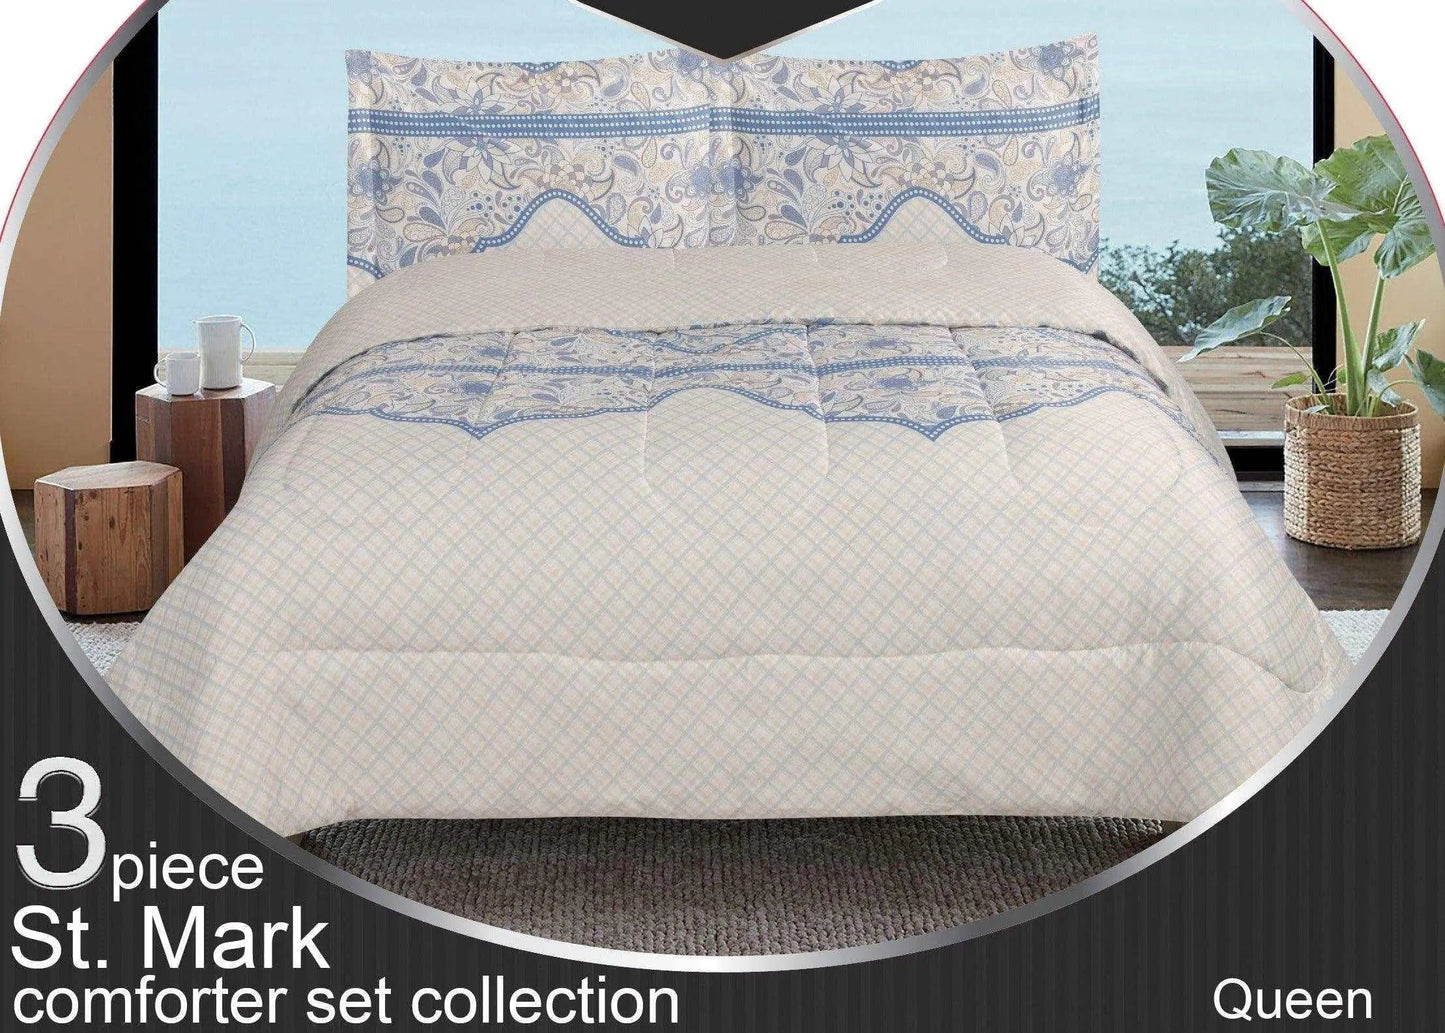 Linen World Quilts & Comforters 3 PC "St. Marks" Queen/King Comforter Set